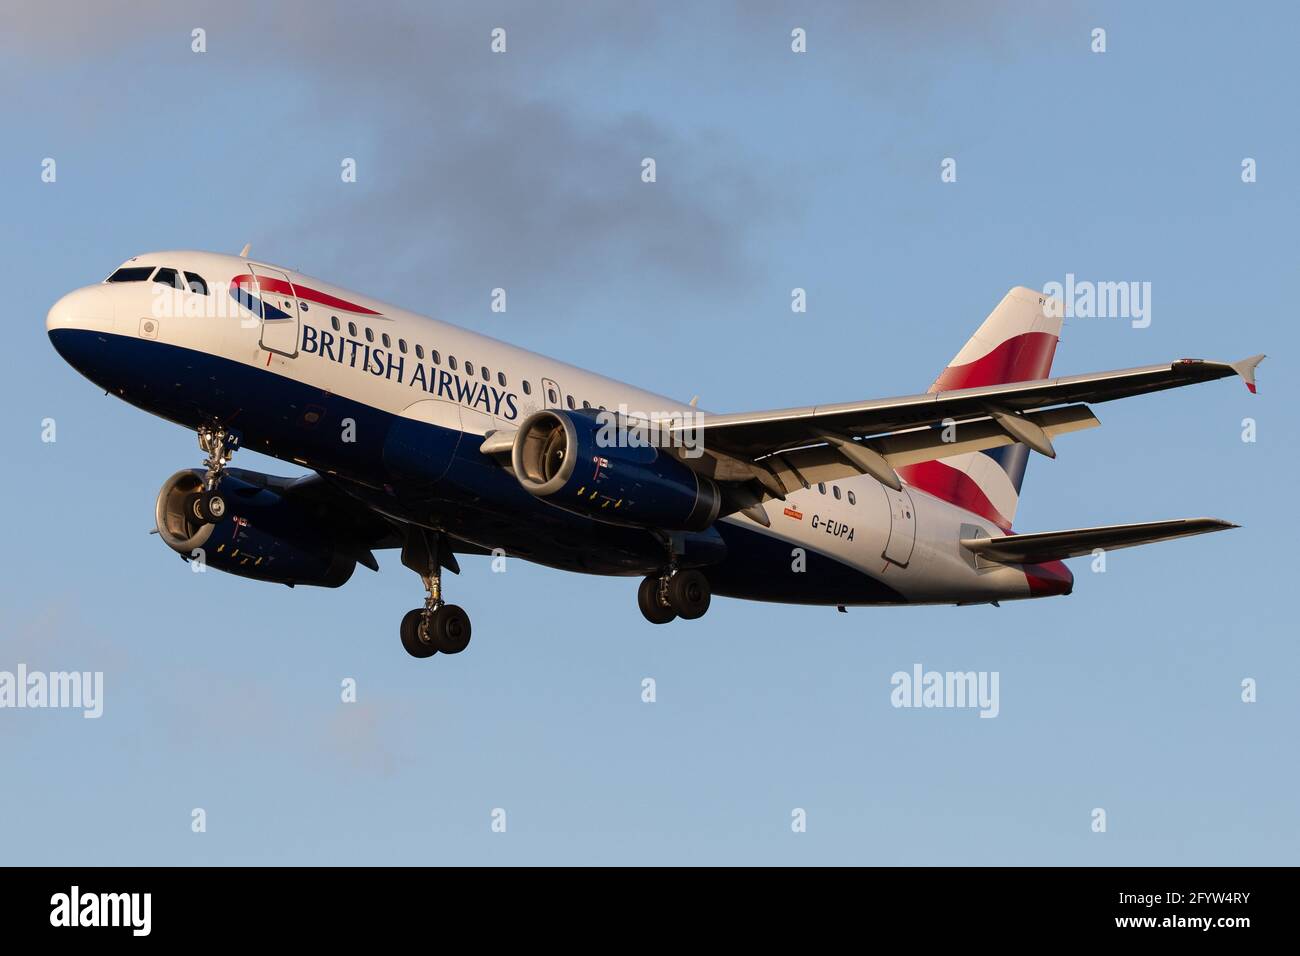 LONDON, UNITED KINGDOM - Feb 23, 2020: British Airways (BA / BAW) approaching London Heathrow Airport (EGLL/LHR) with an Airbus A319-131 (G-EUPA/1082) Stock Photo